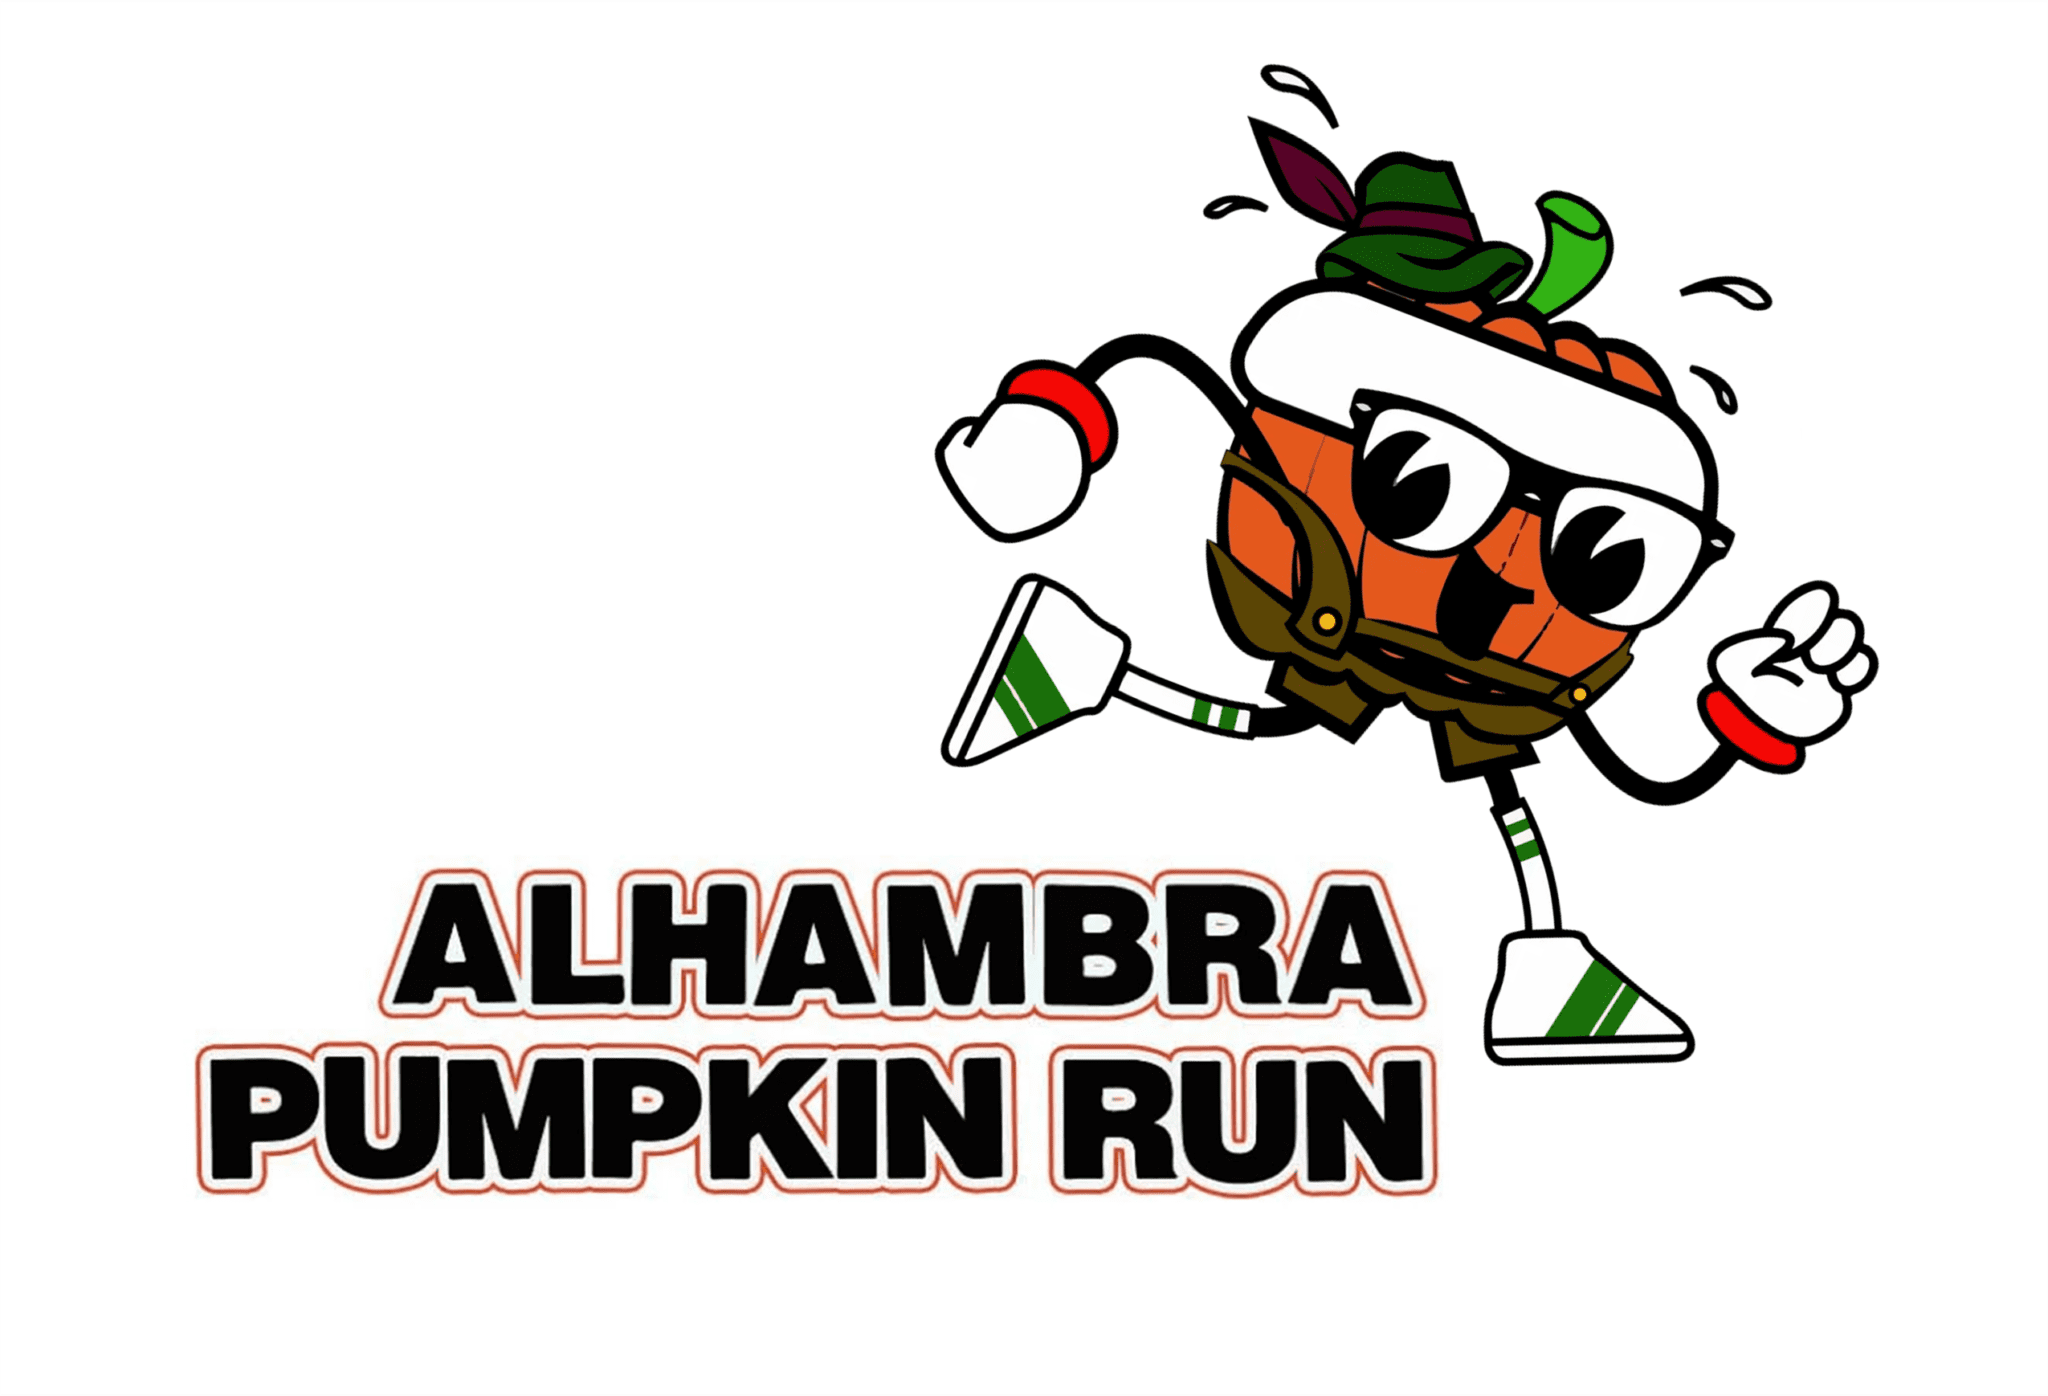 Alhambra Pumpkin Run logo on RaceRaves